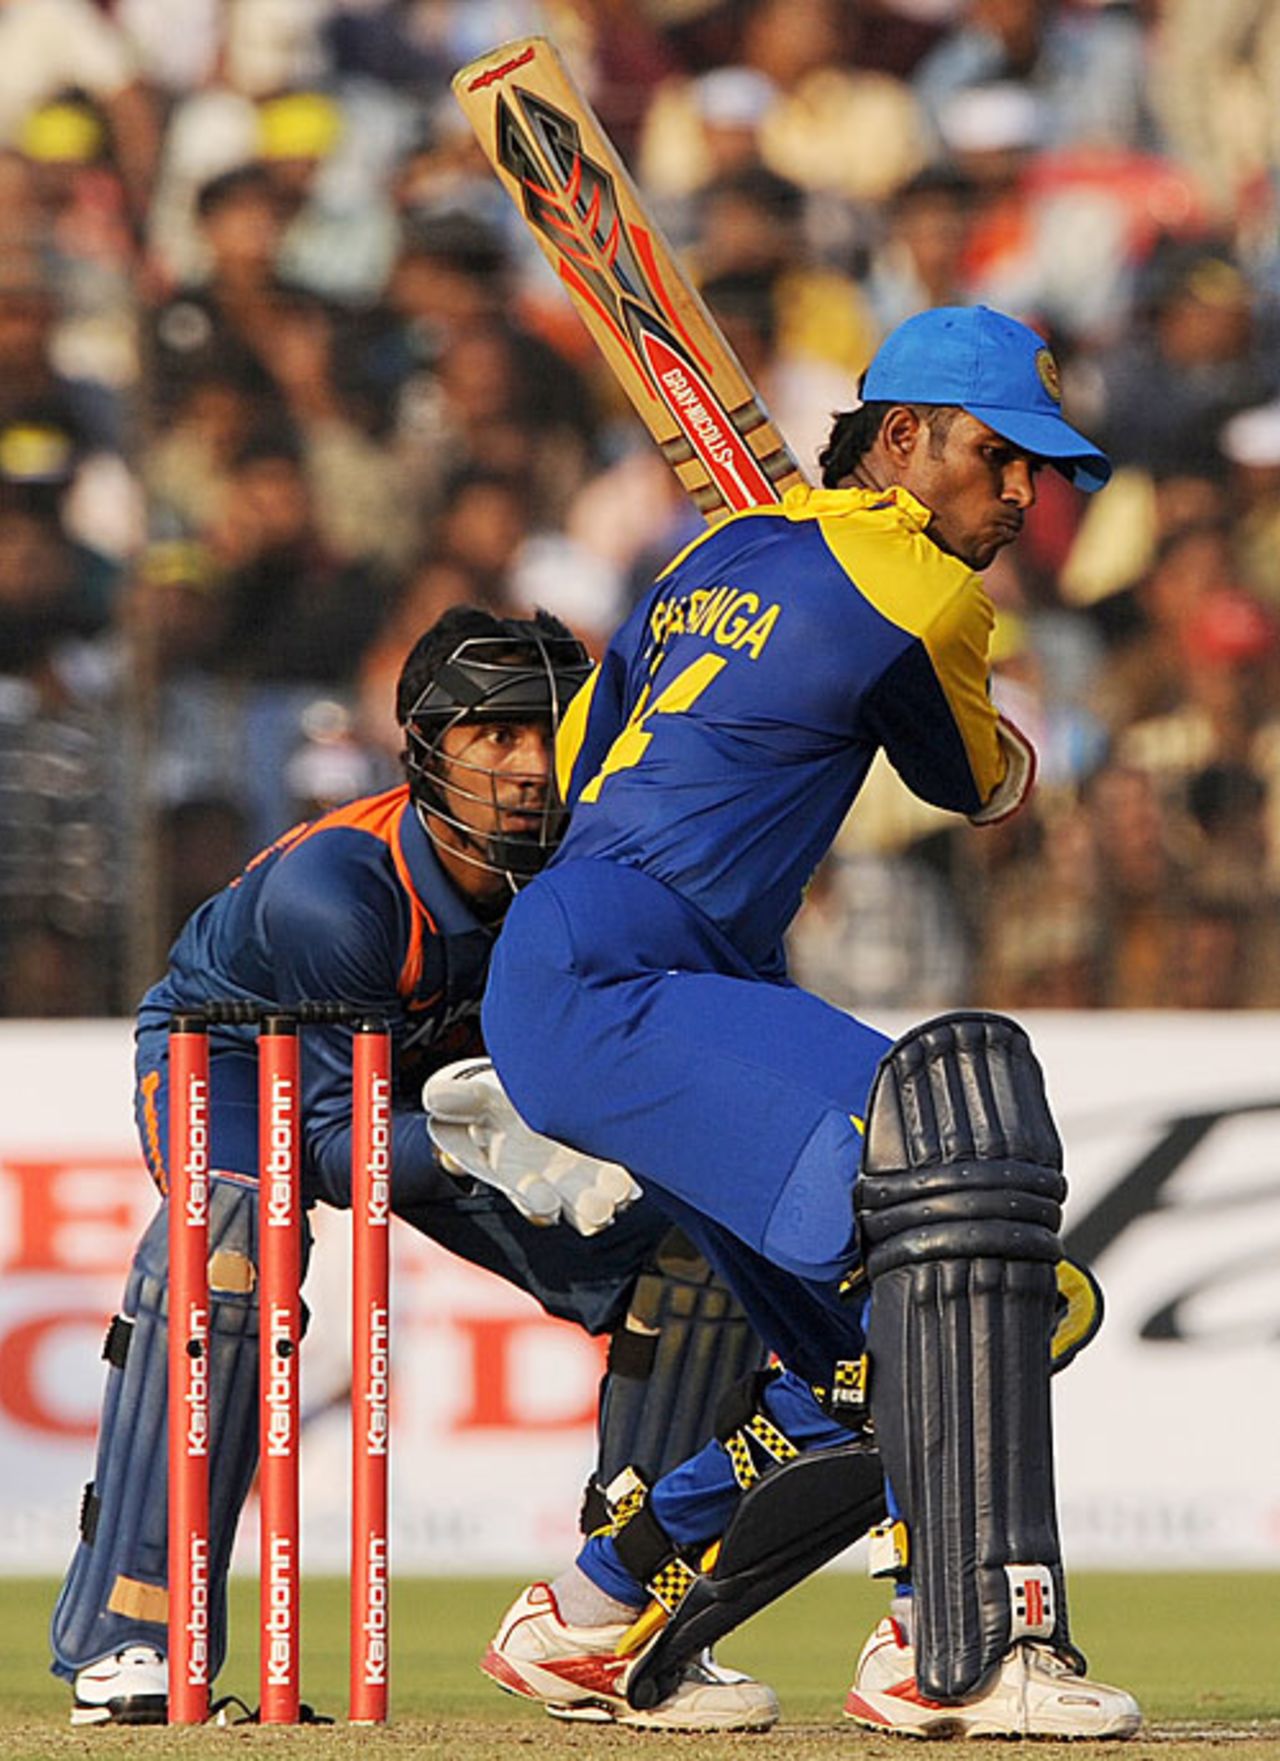 Upul Tharanga en route to his fifty, India v Sri Lanka, 3rd ODI, Cuttack, December 21, 2009